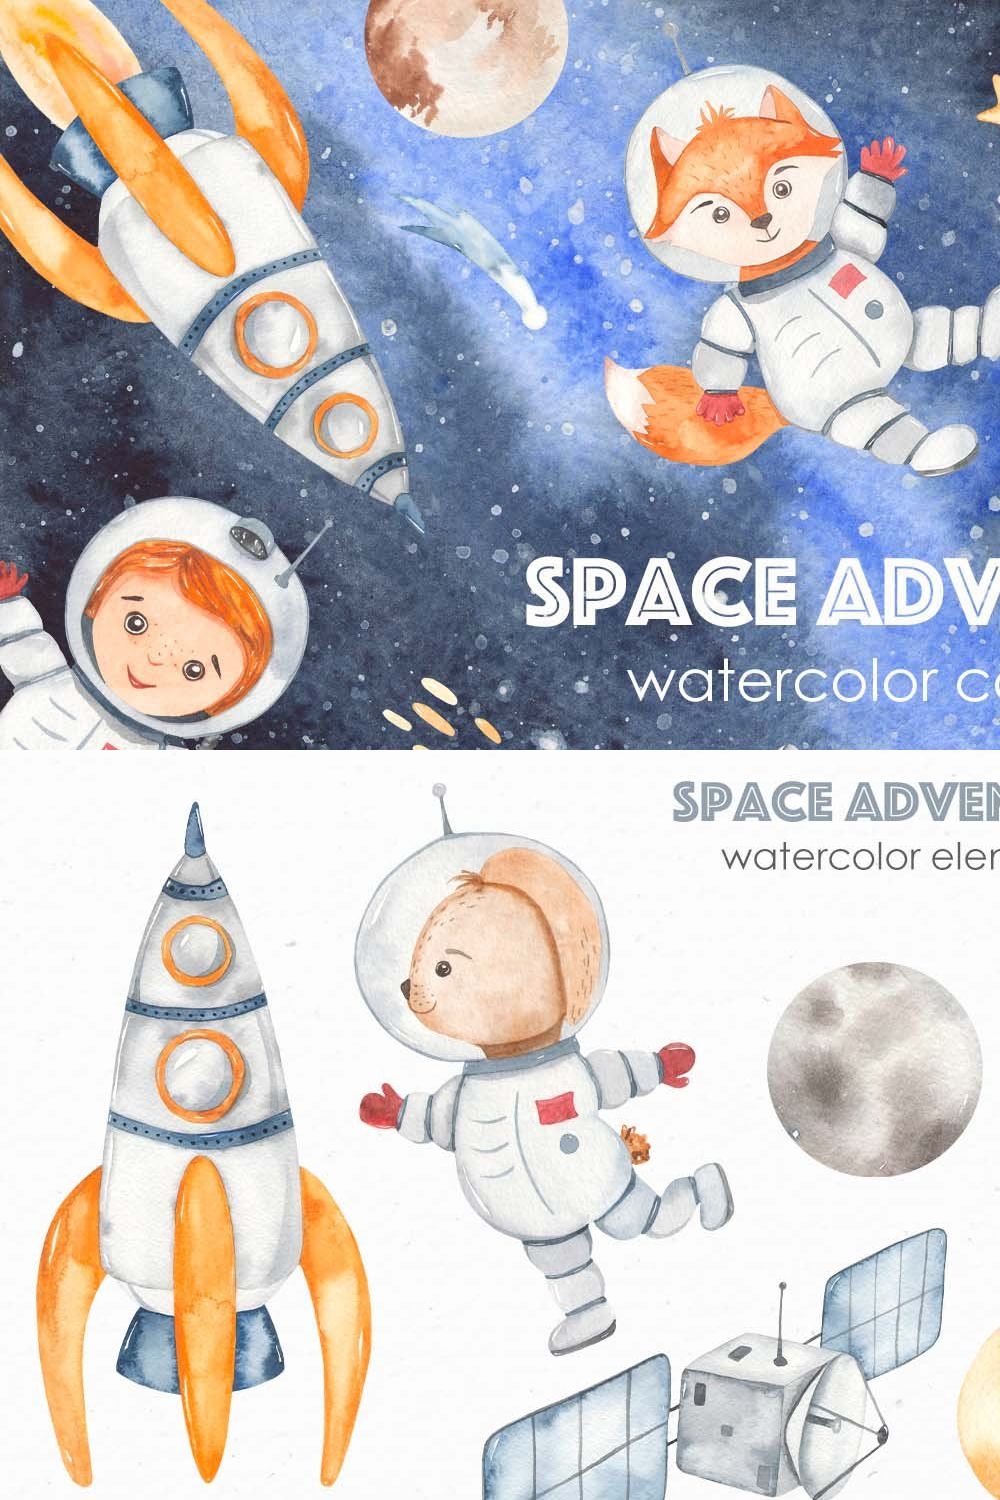 Space adventure watercolor pinterest preview image.